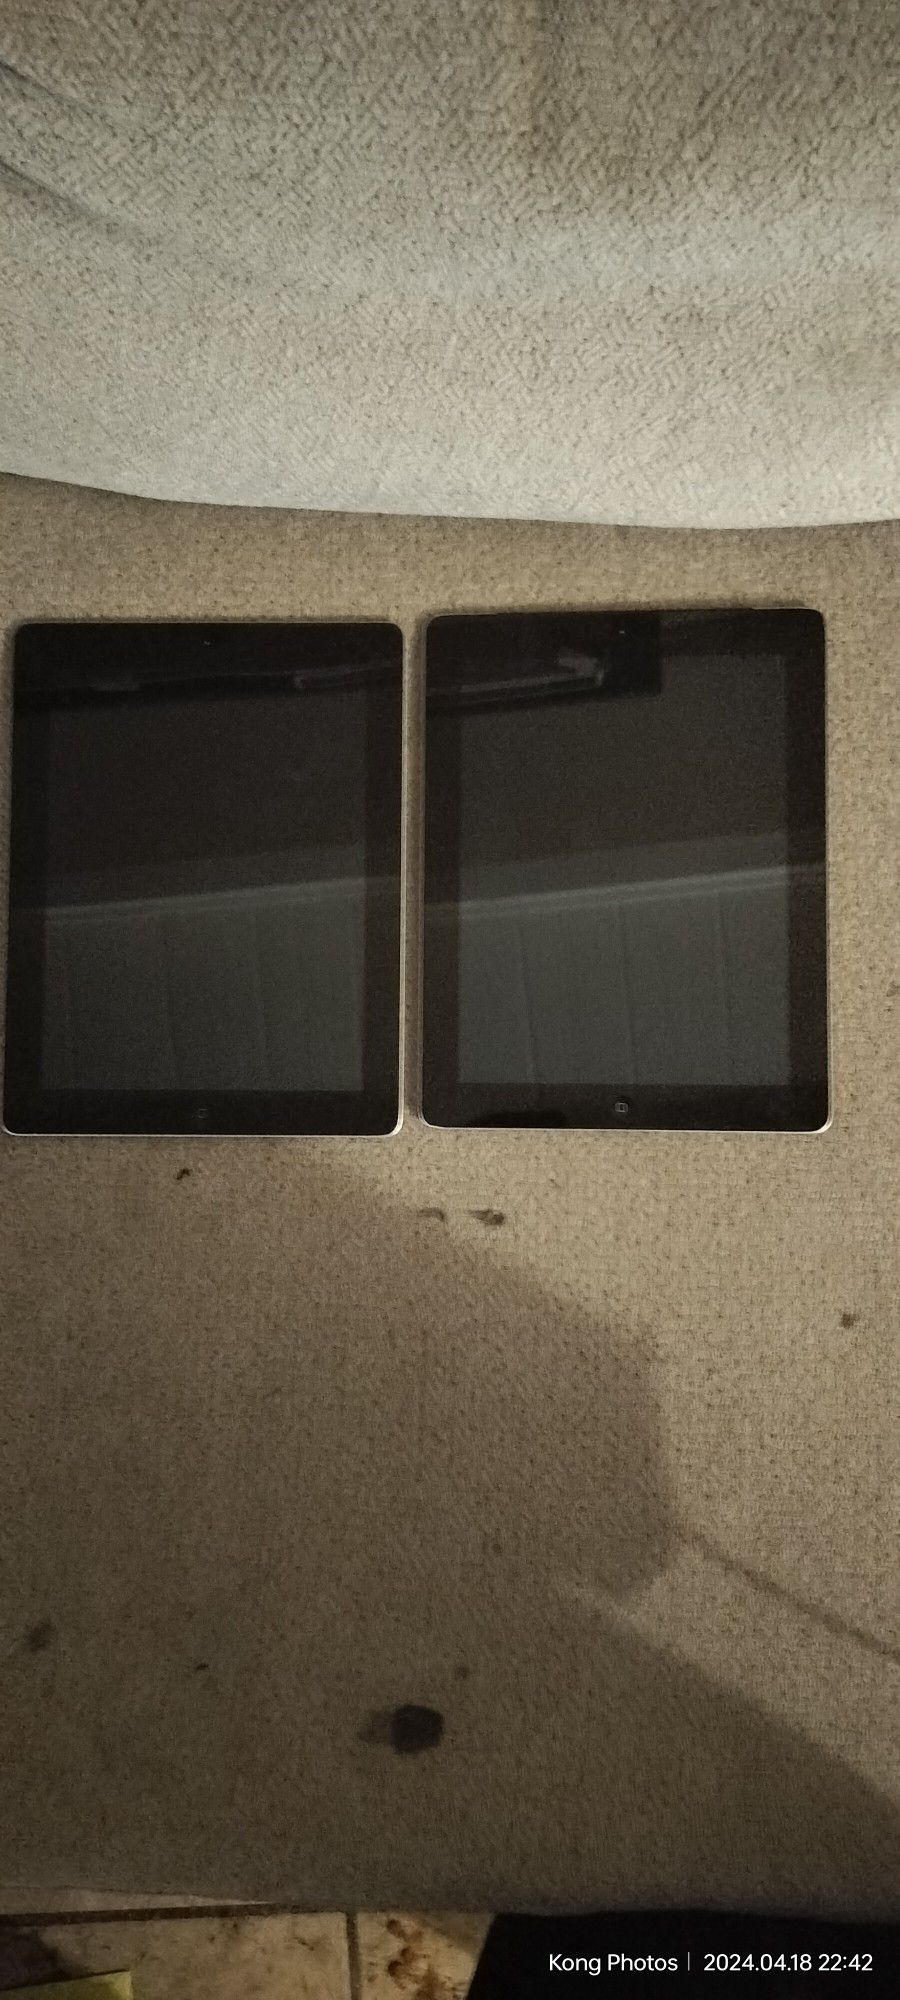 2 iPad 2ed Edition Apple Locked For Parts